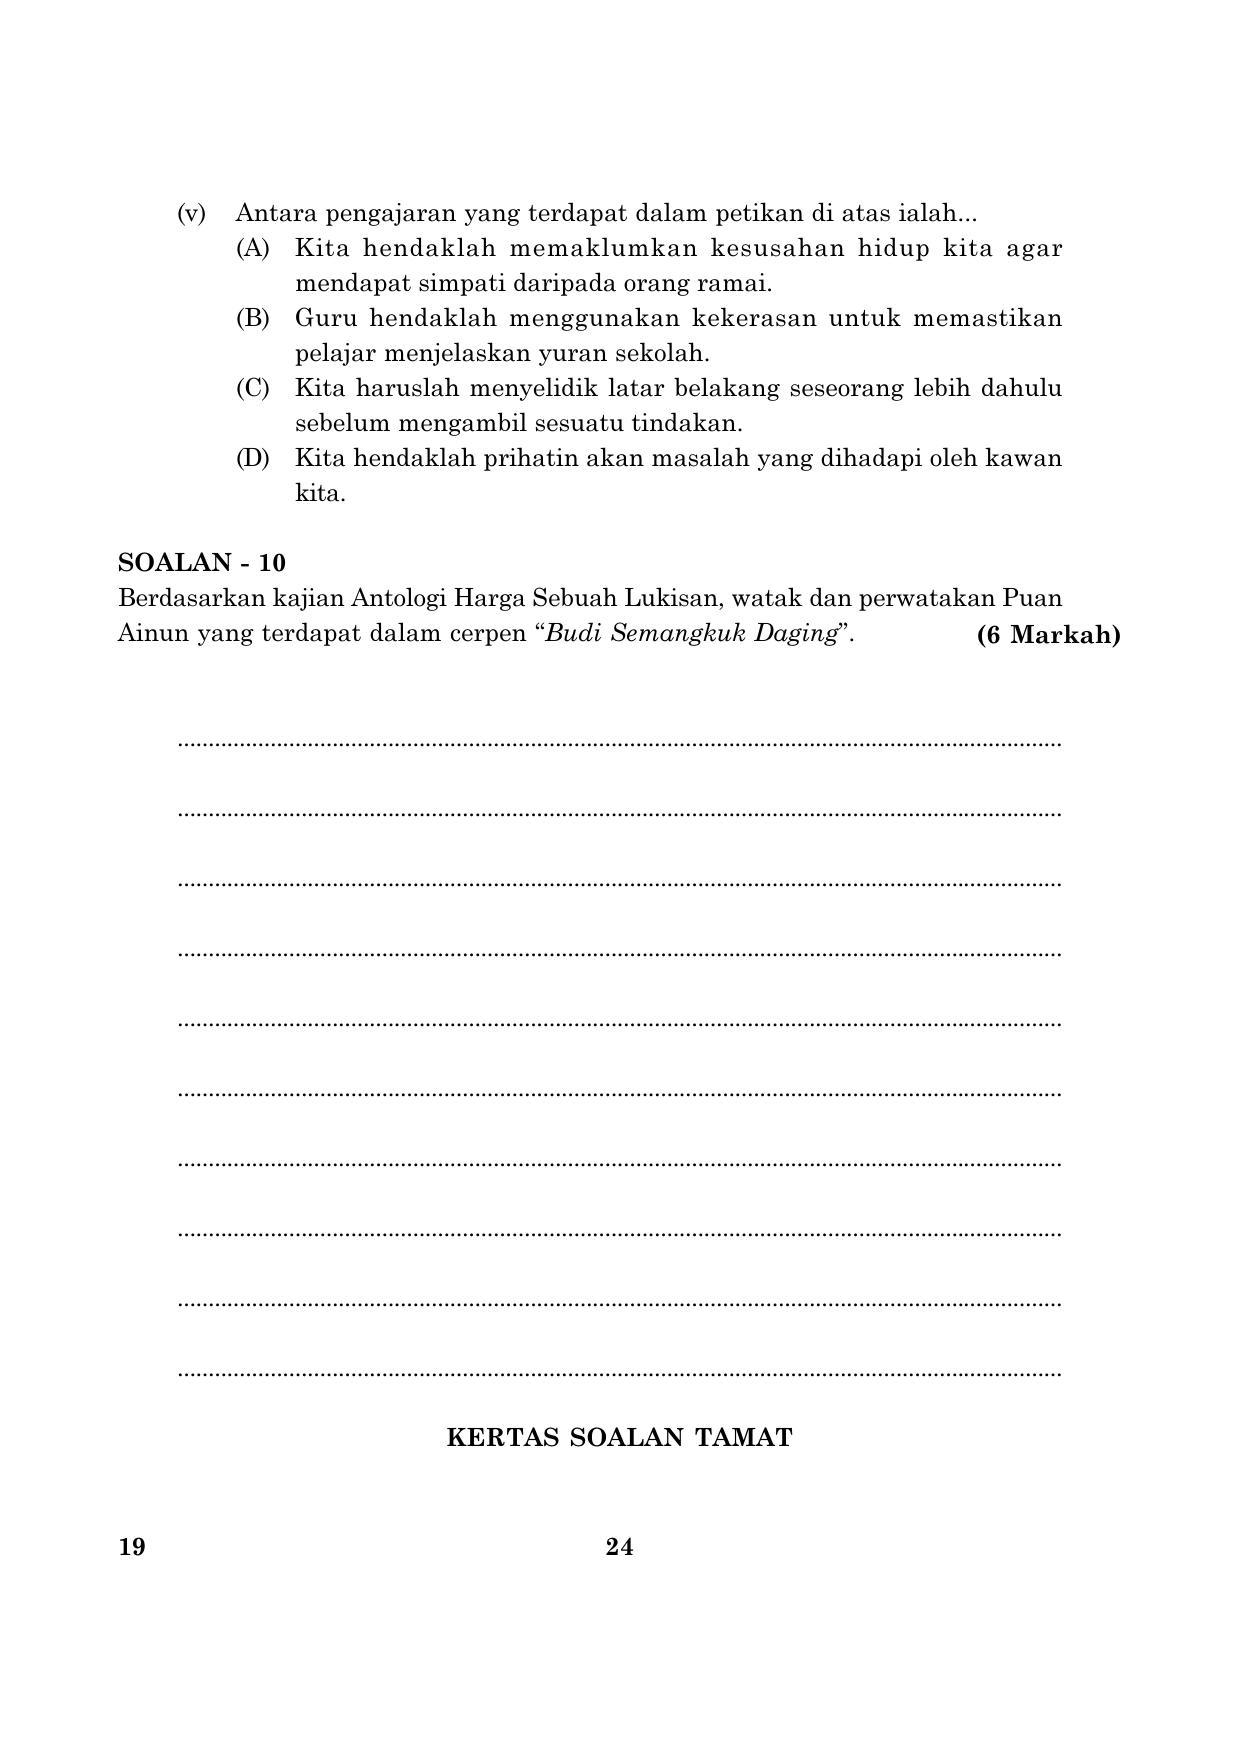 CBSE Class 10 019 Bahasamelayu English 2016 Question Paper - Page 24